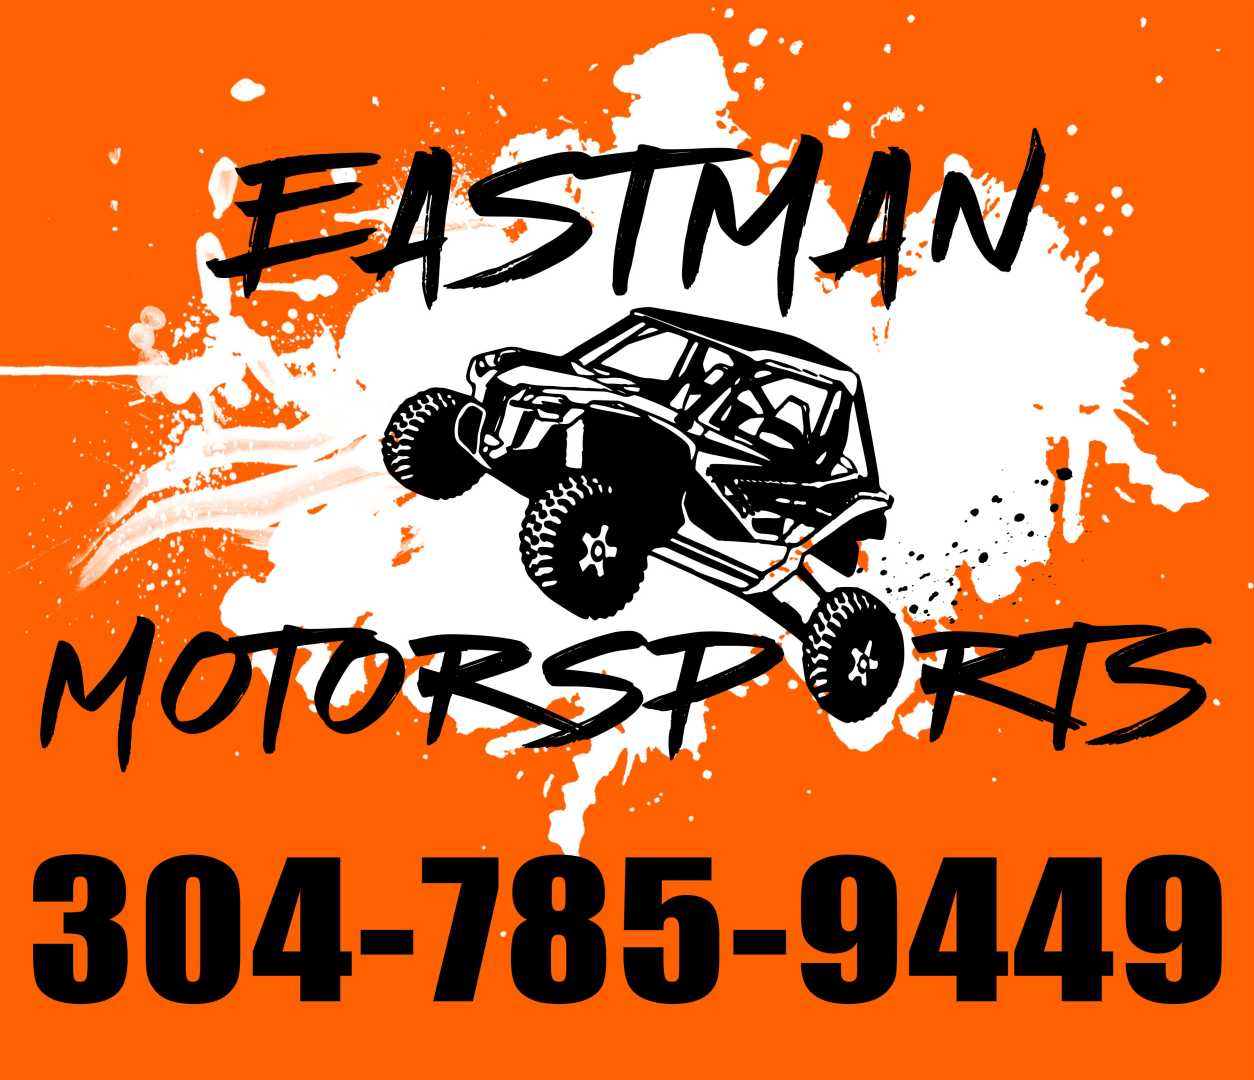 Eastman Motorsports Web Listing Photo FINAL